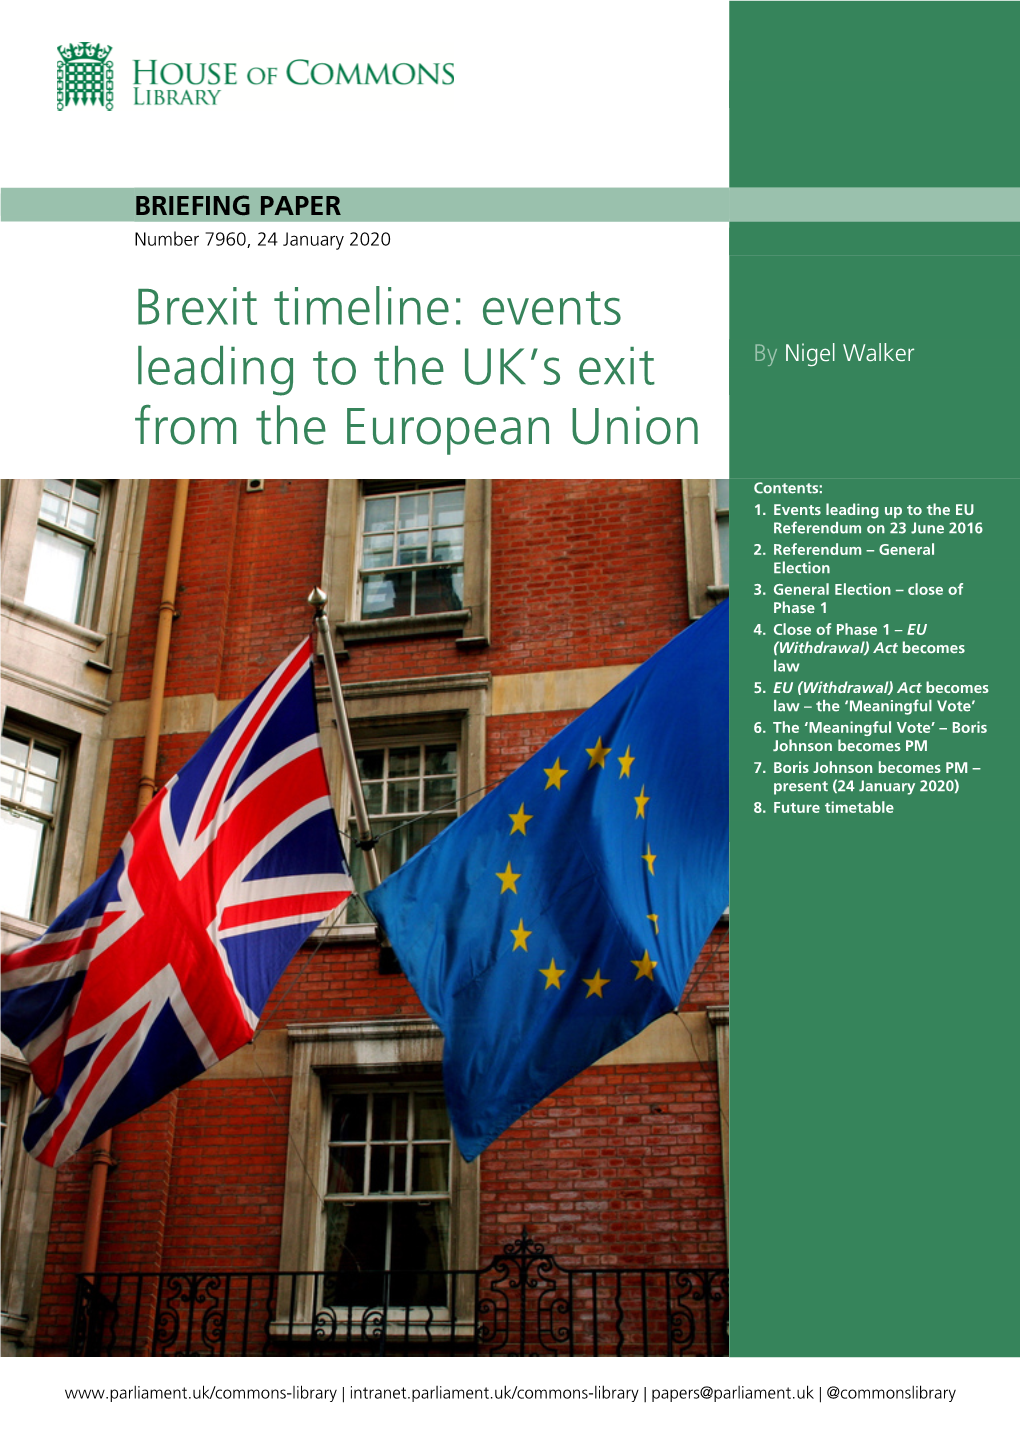 Brexit Timeline: Events by Nigel Walker